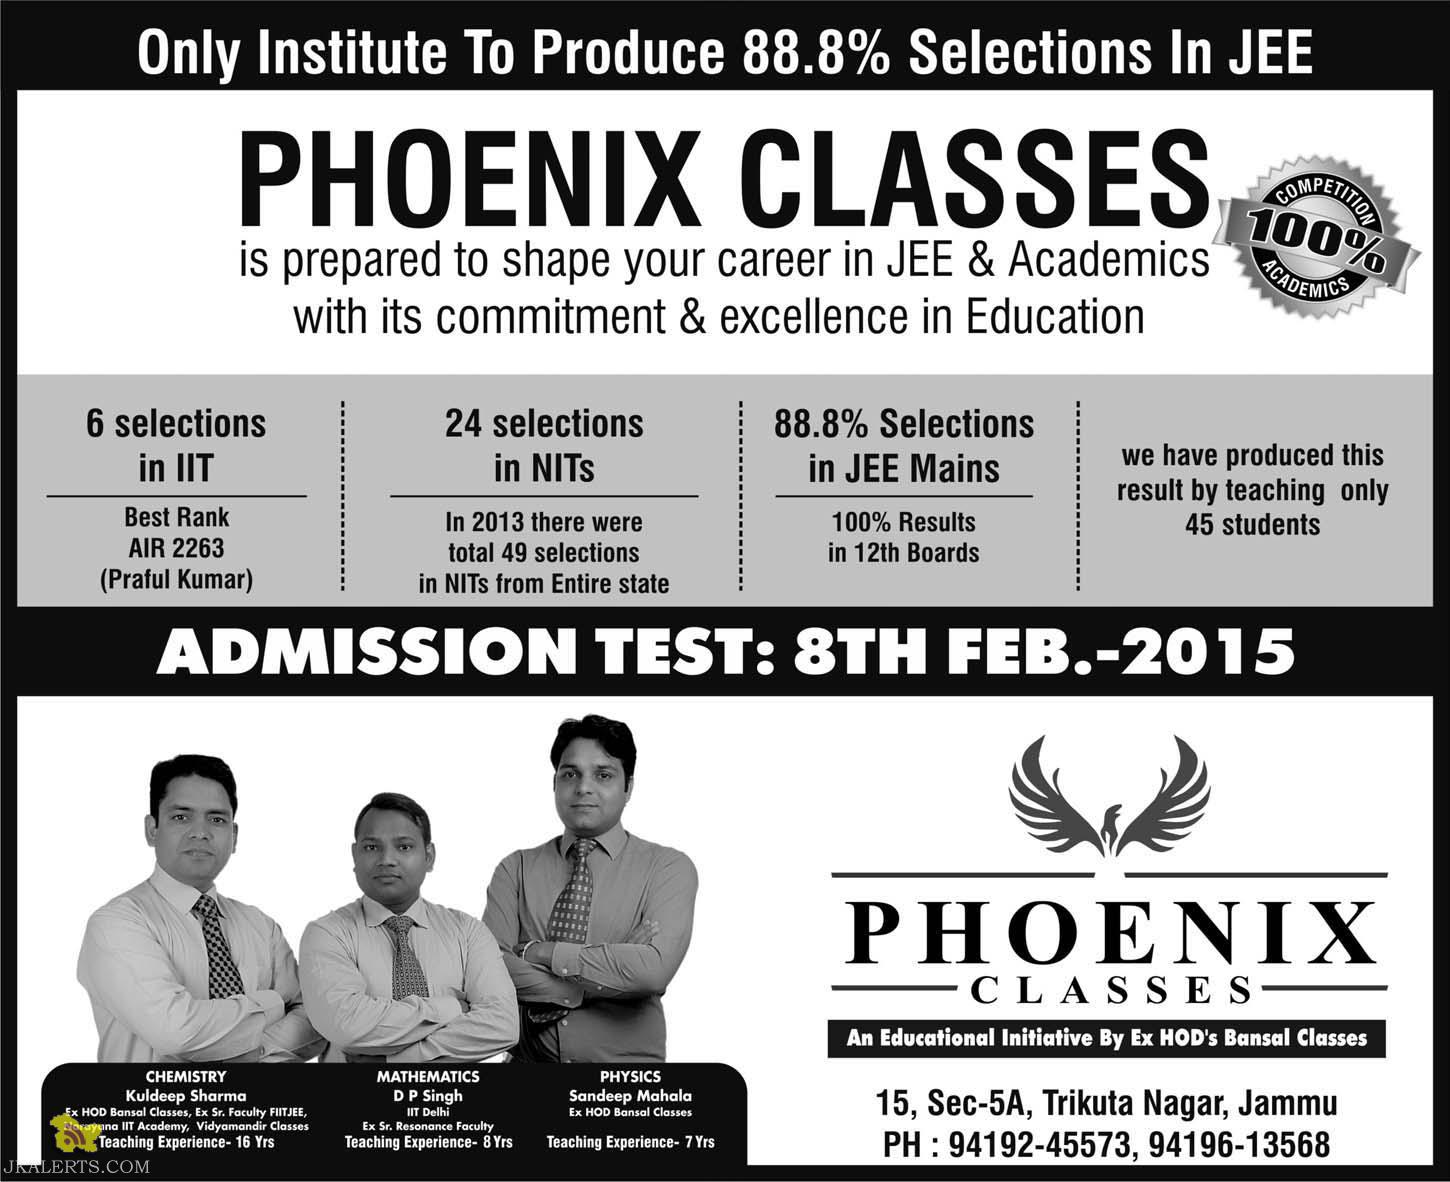 PHOENIX CLASSES ADMISSION TEST 8TH FEB 2015